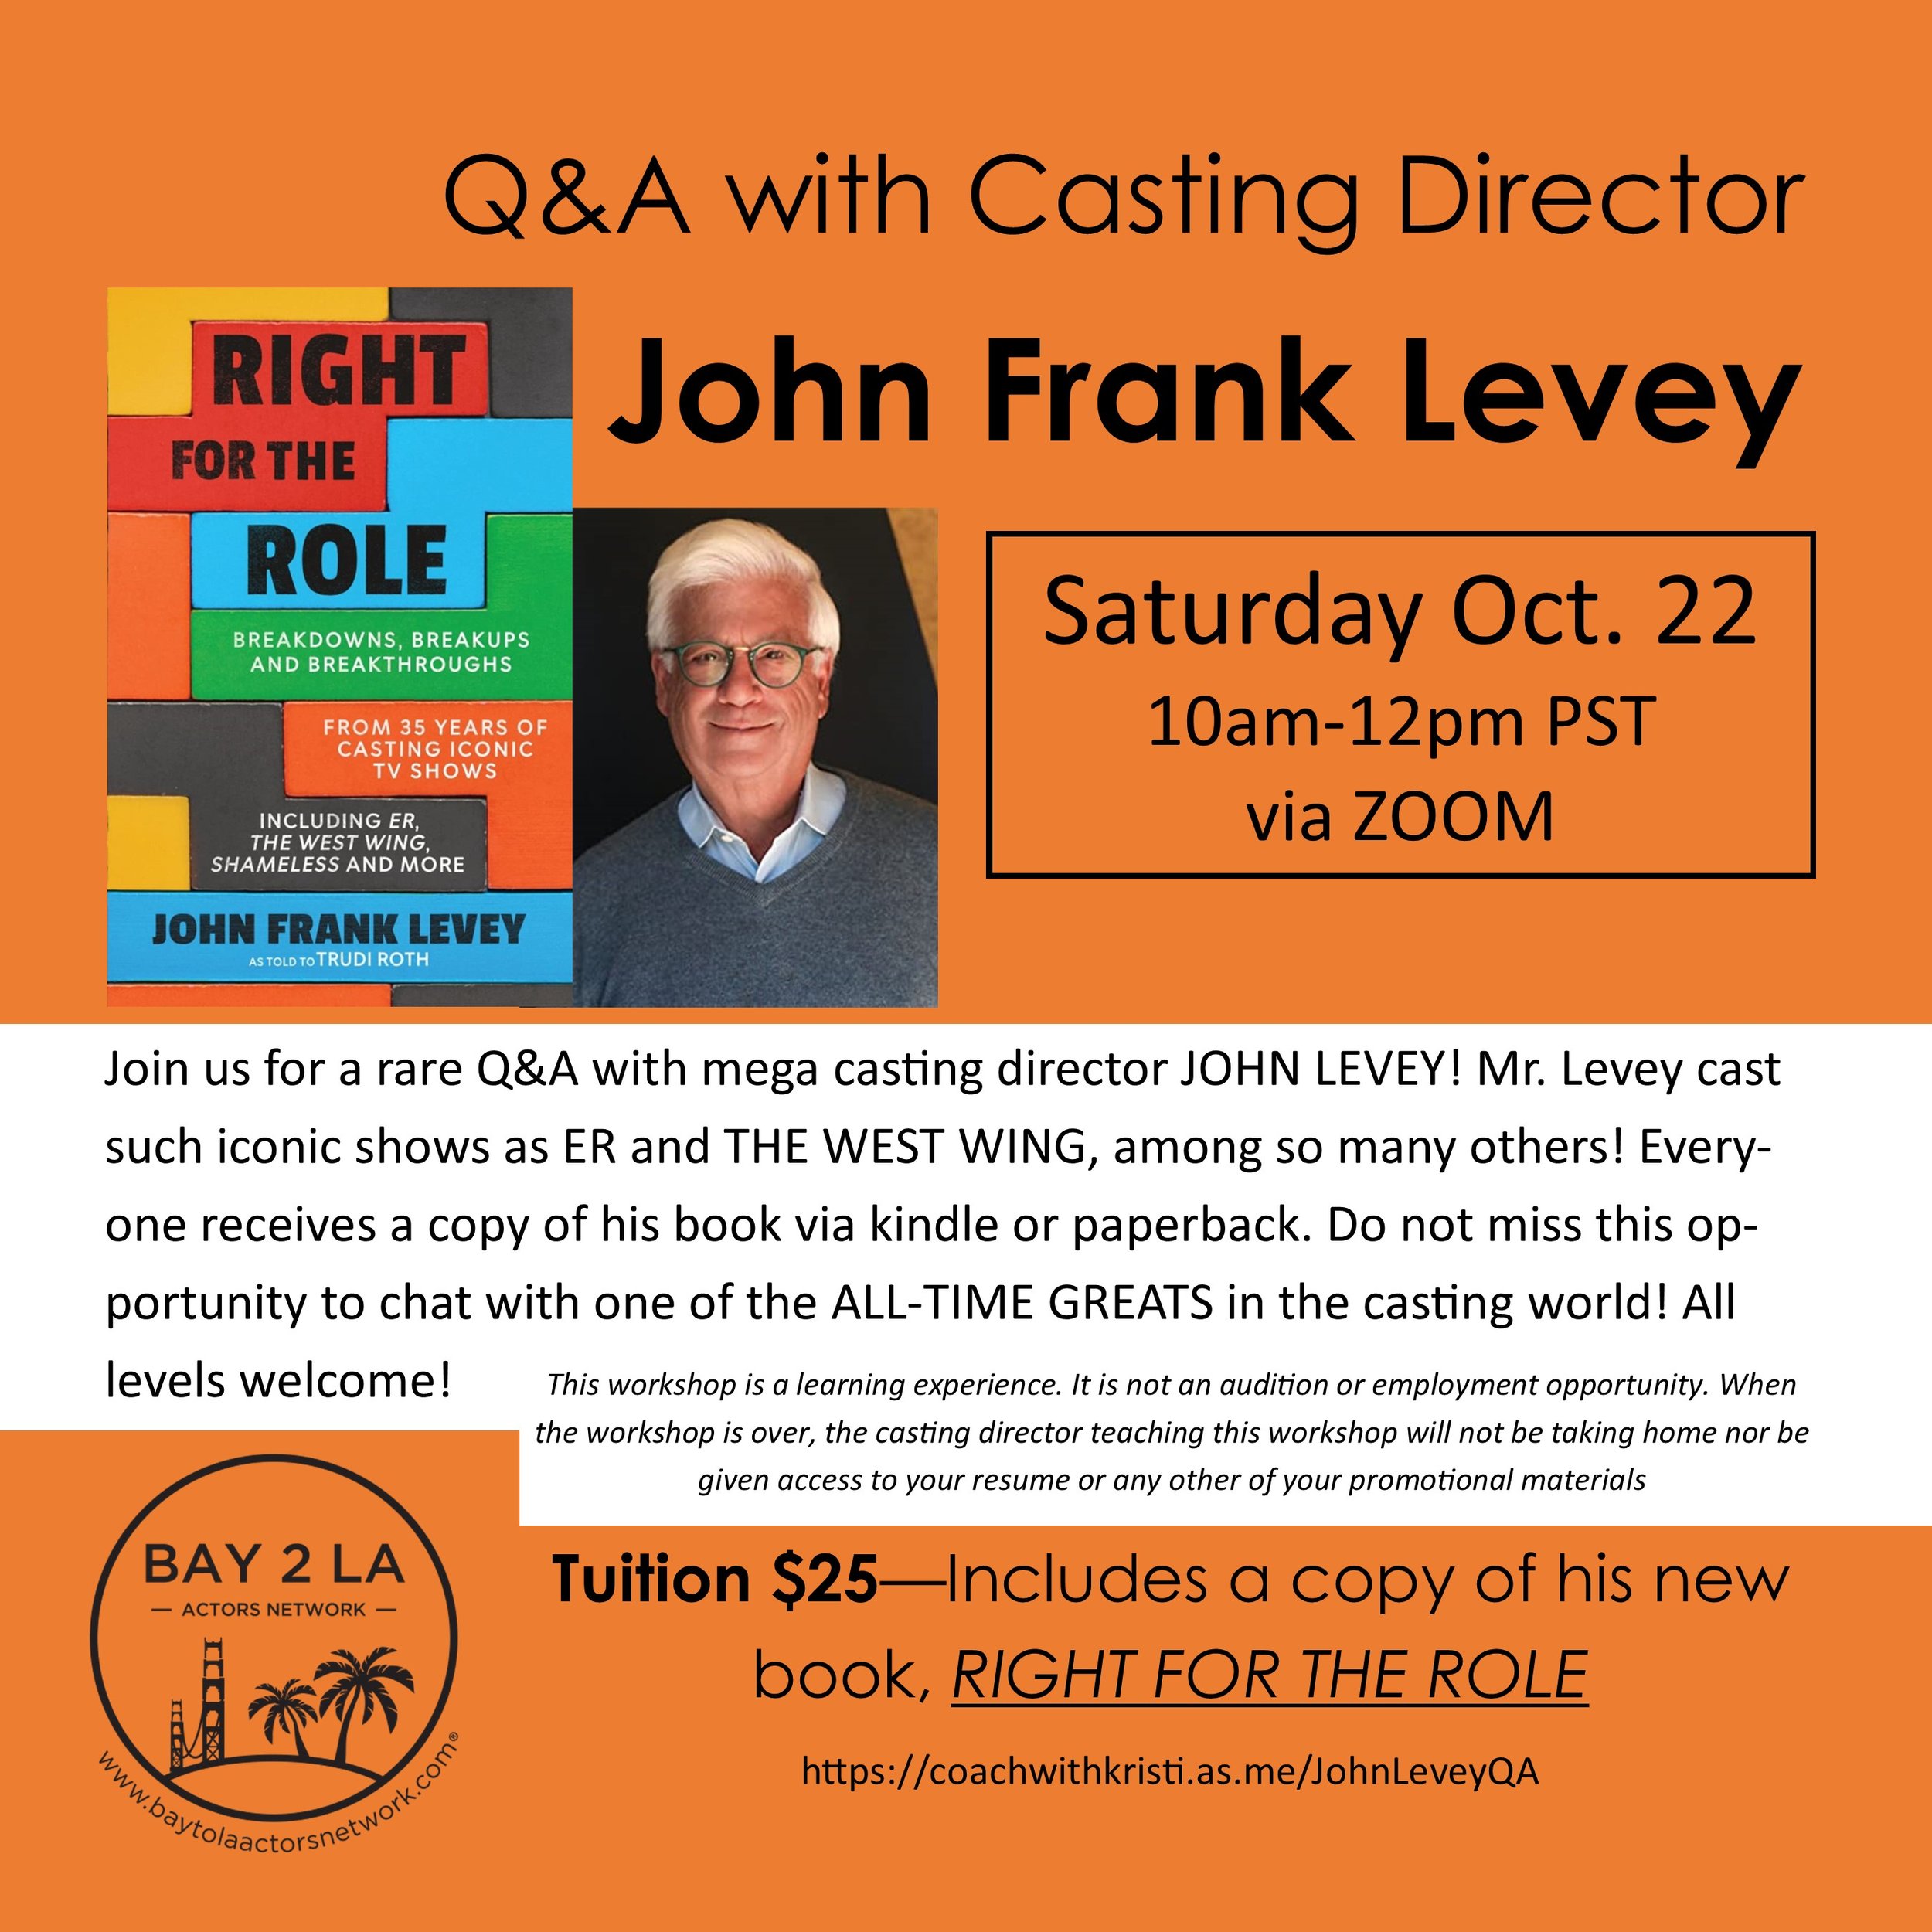 Q&A with John Frank Levey October 2022